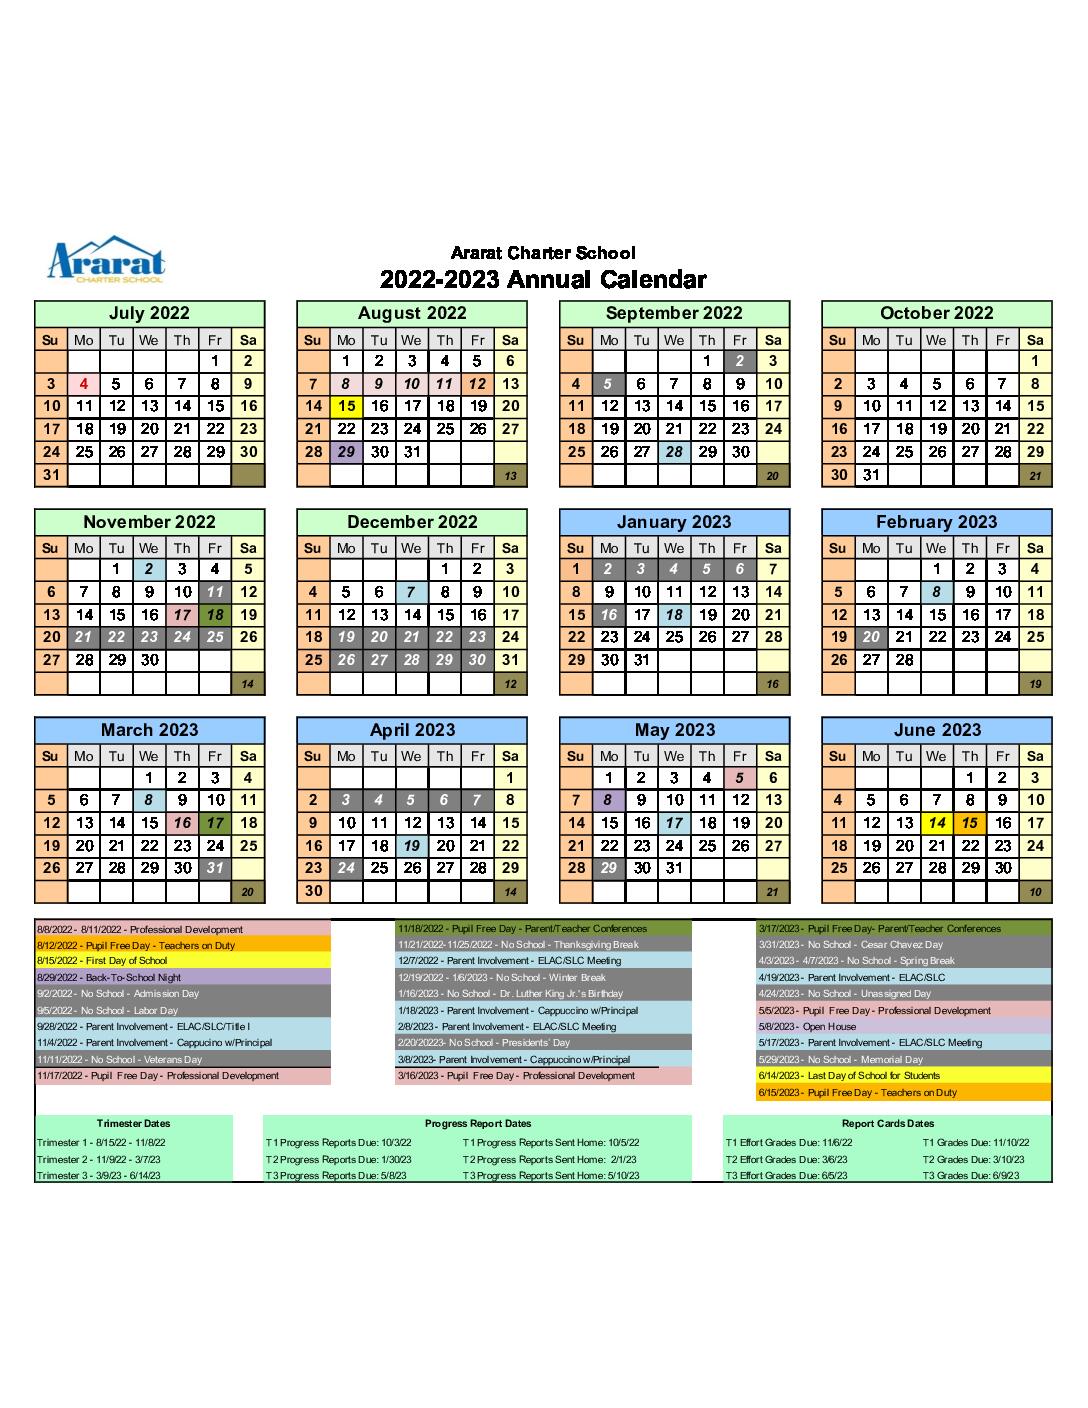 annual-calendar-ararat-charter-school